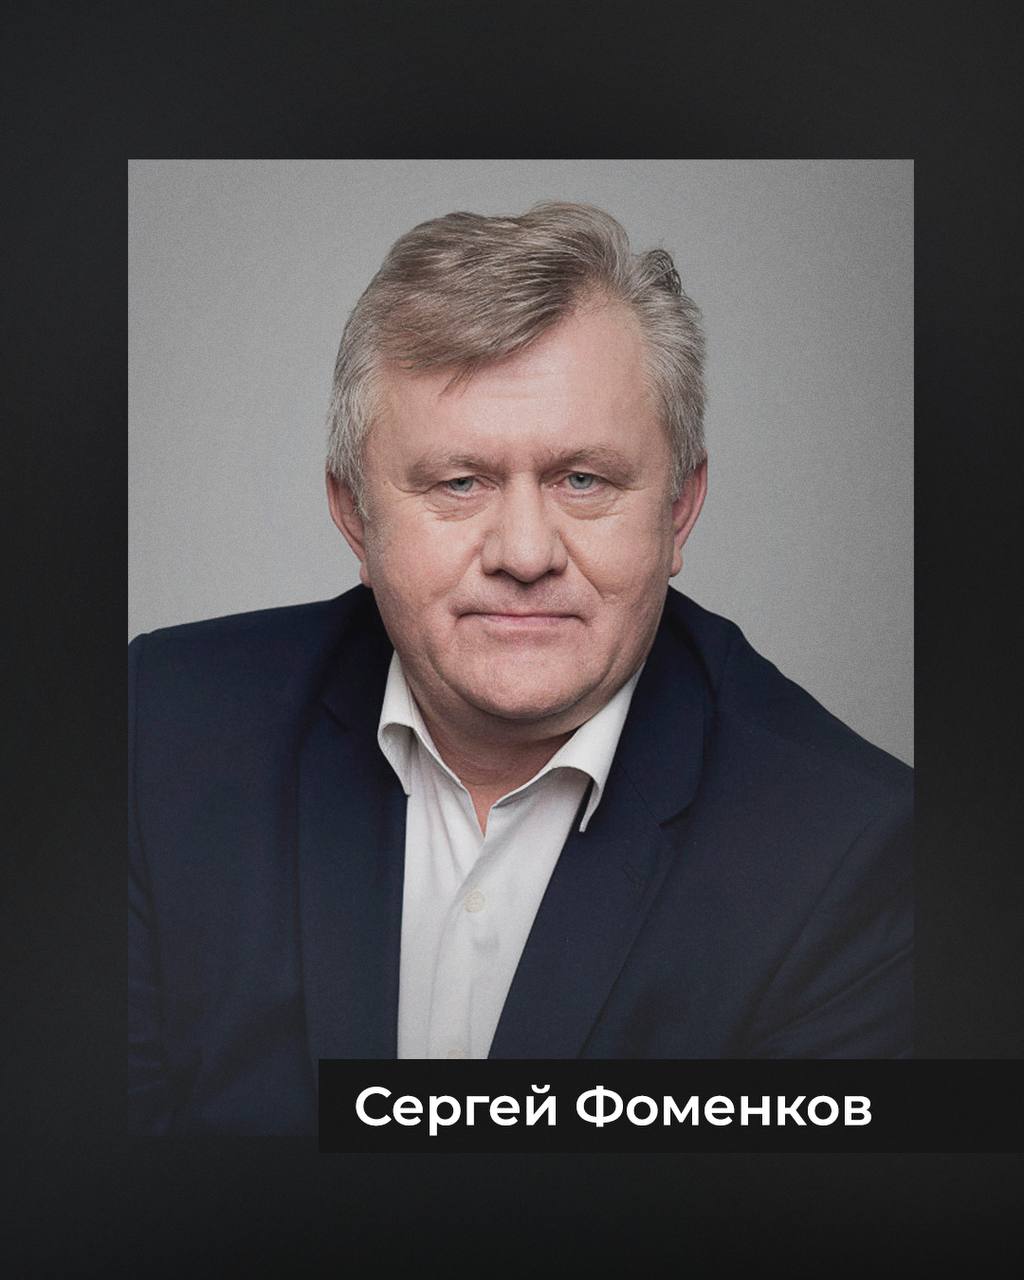 Борисов Сергей Владимирович Москва бизнесмен